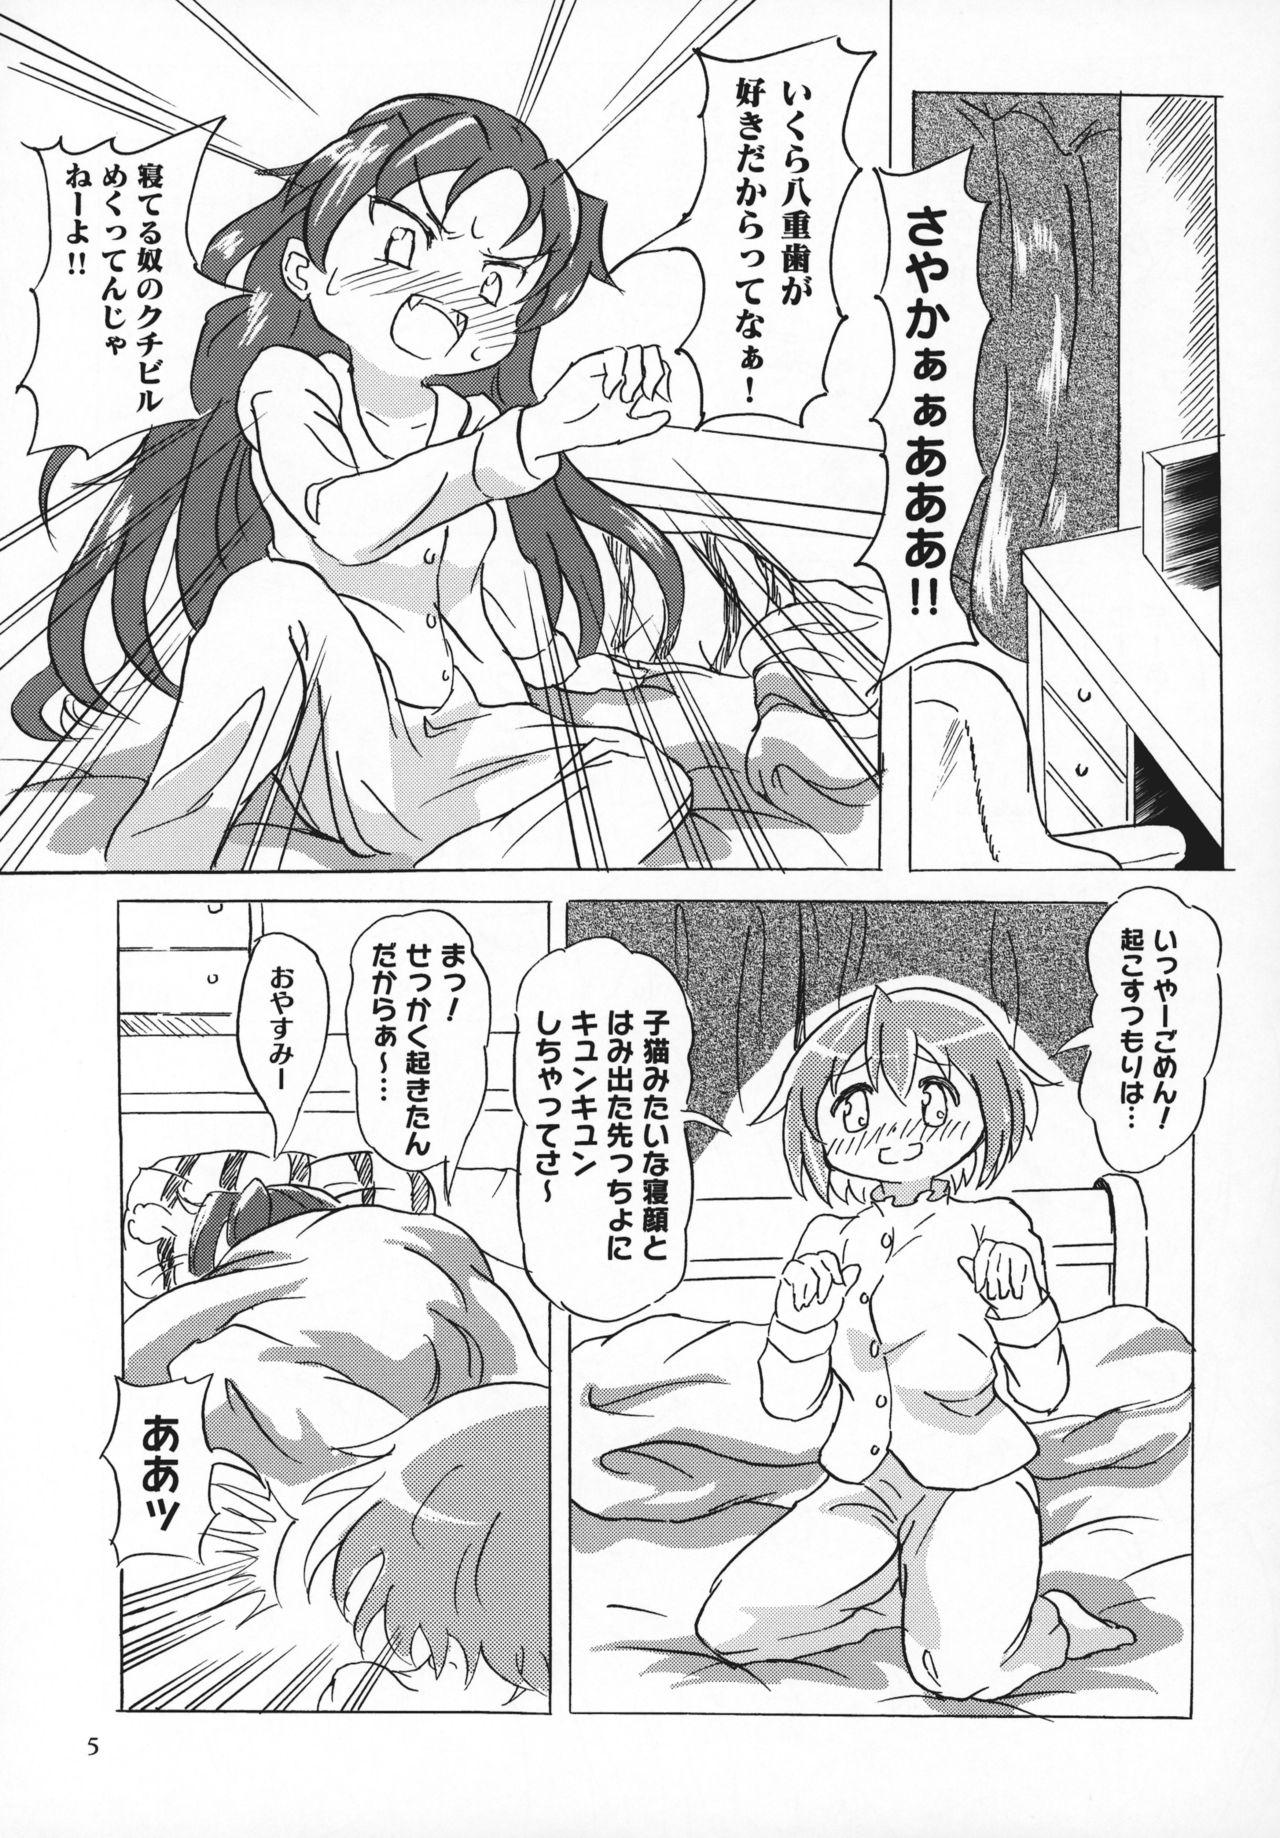 Throat yaeba fetish sayaka-chan 2 - Puella magi madoka magica Hardcore - Page 4